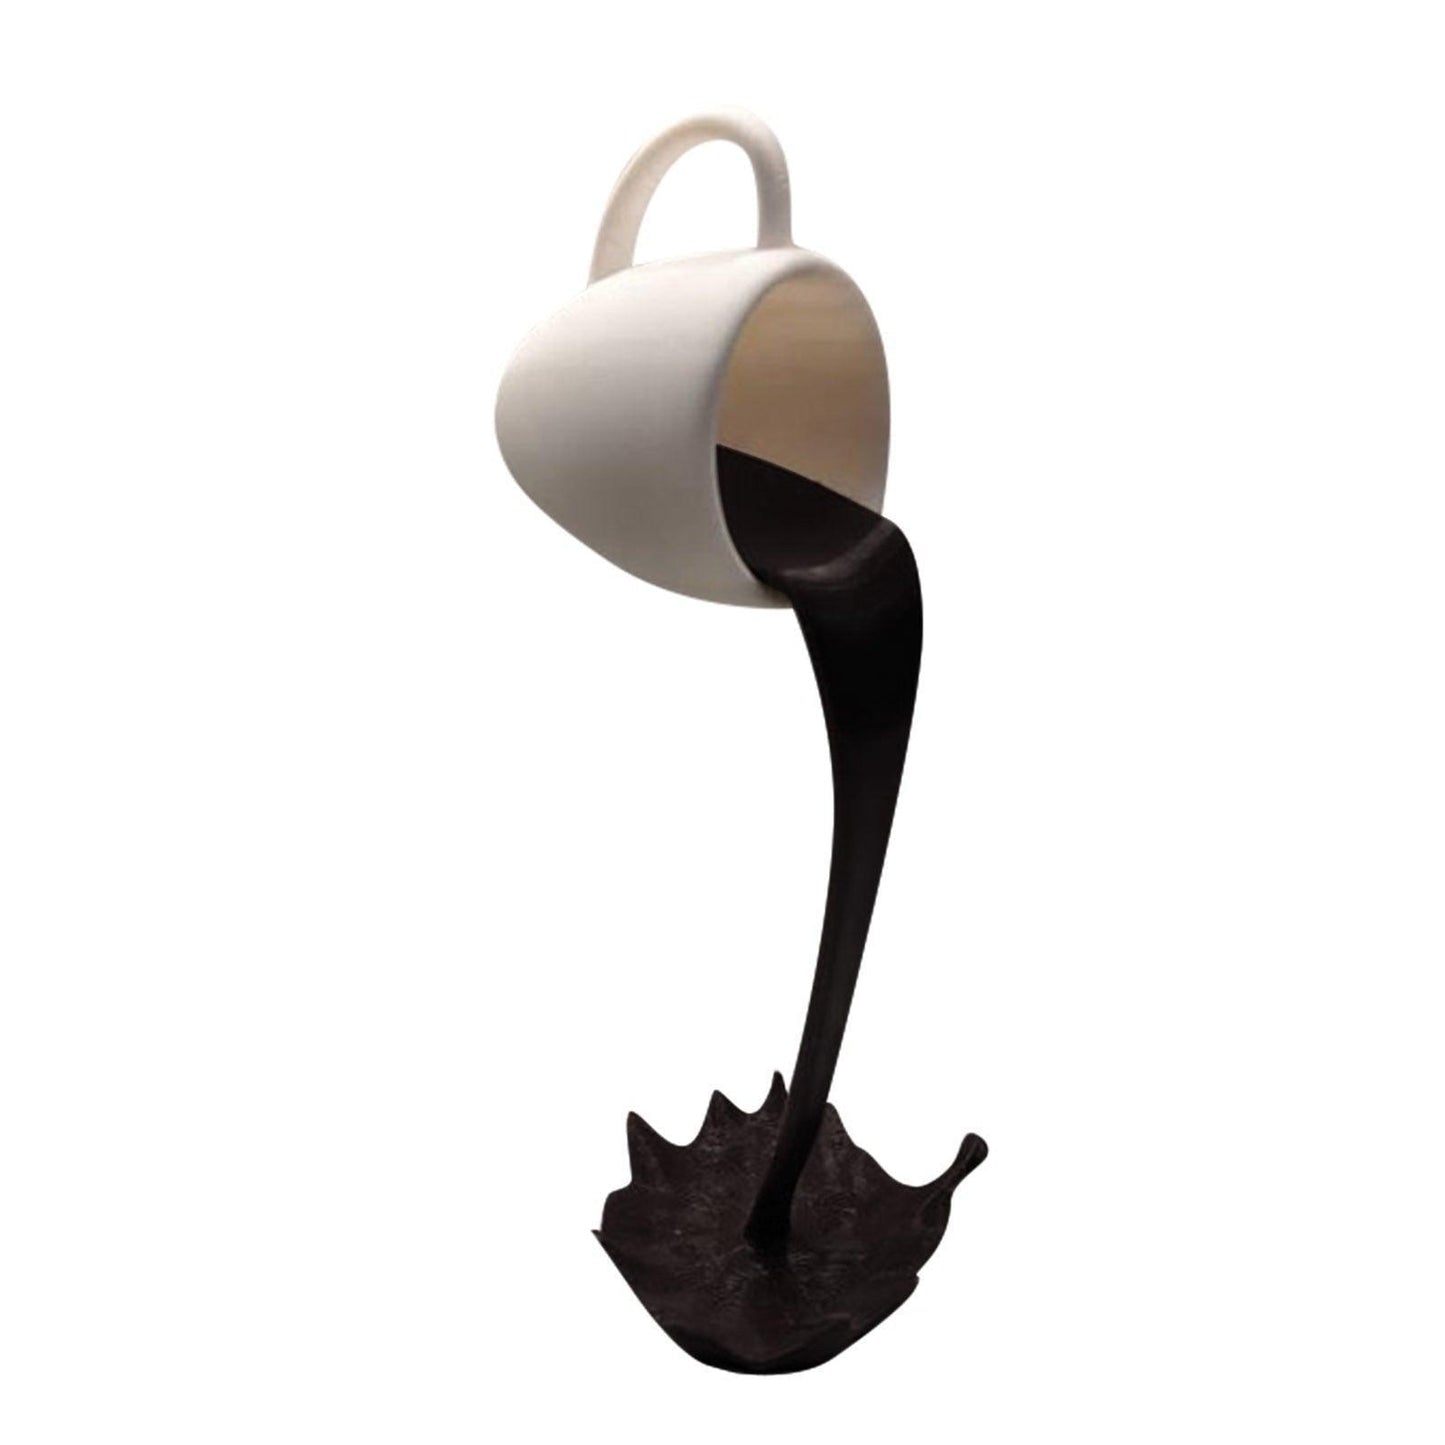  Floating Coffee Sculpture sold by Fleurlovin, Free Shipping Worldwide